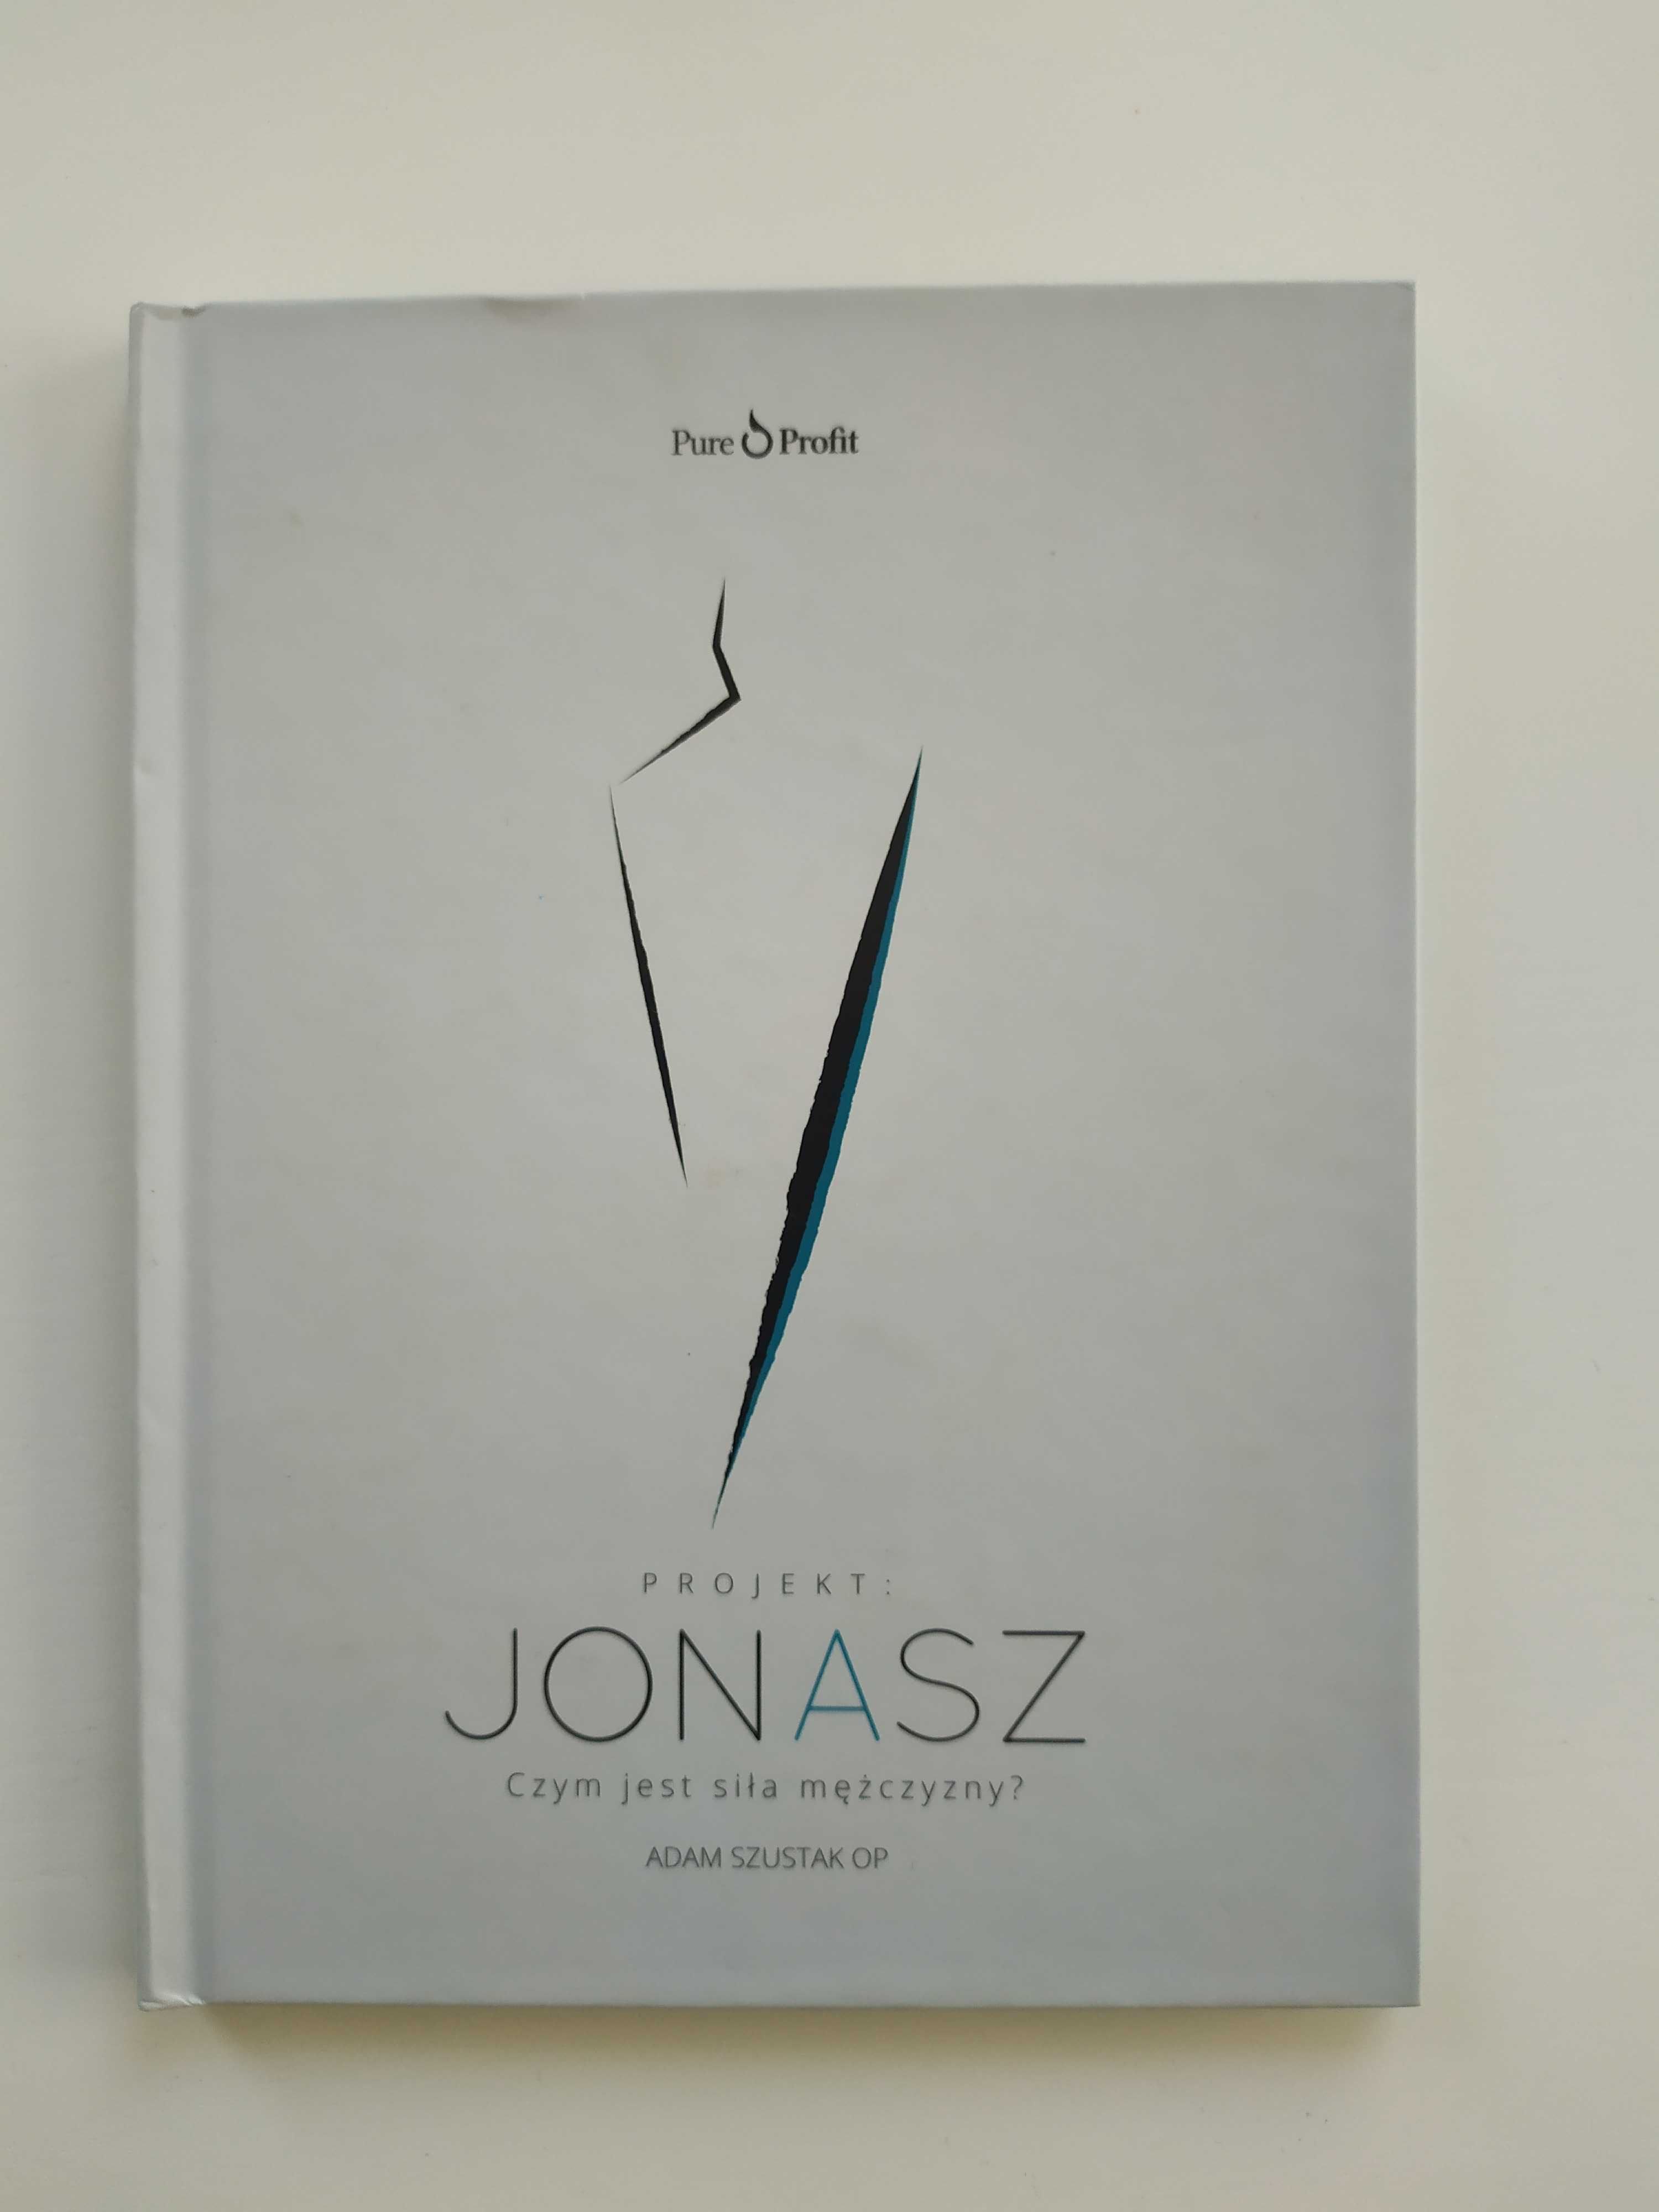 Audiobook "Projekt Jonasz", o. Adam Szustak